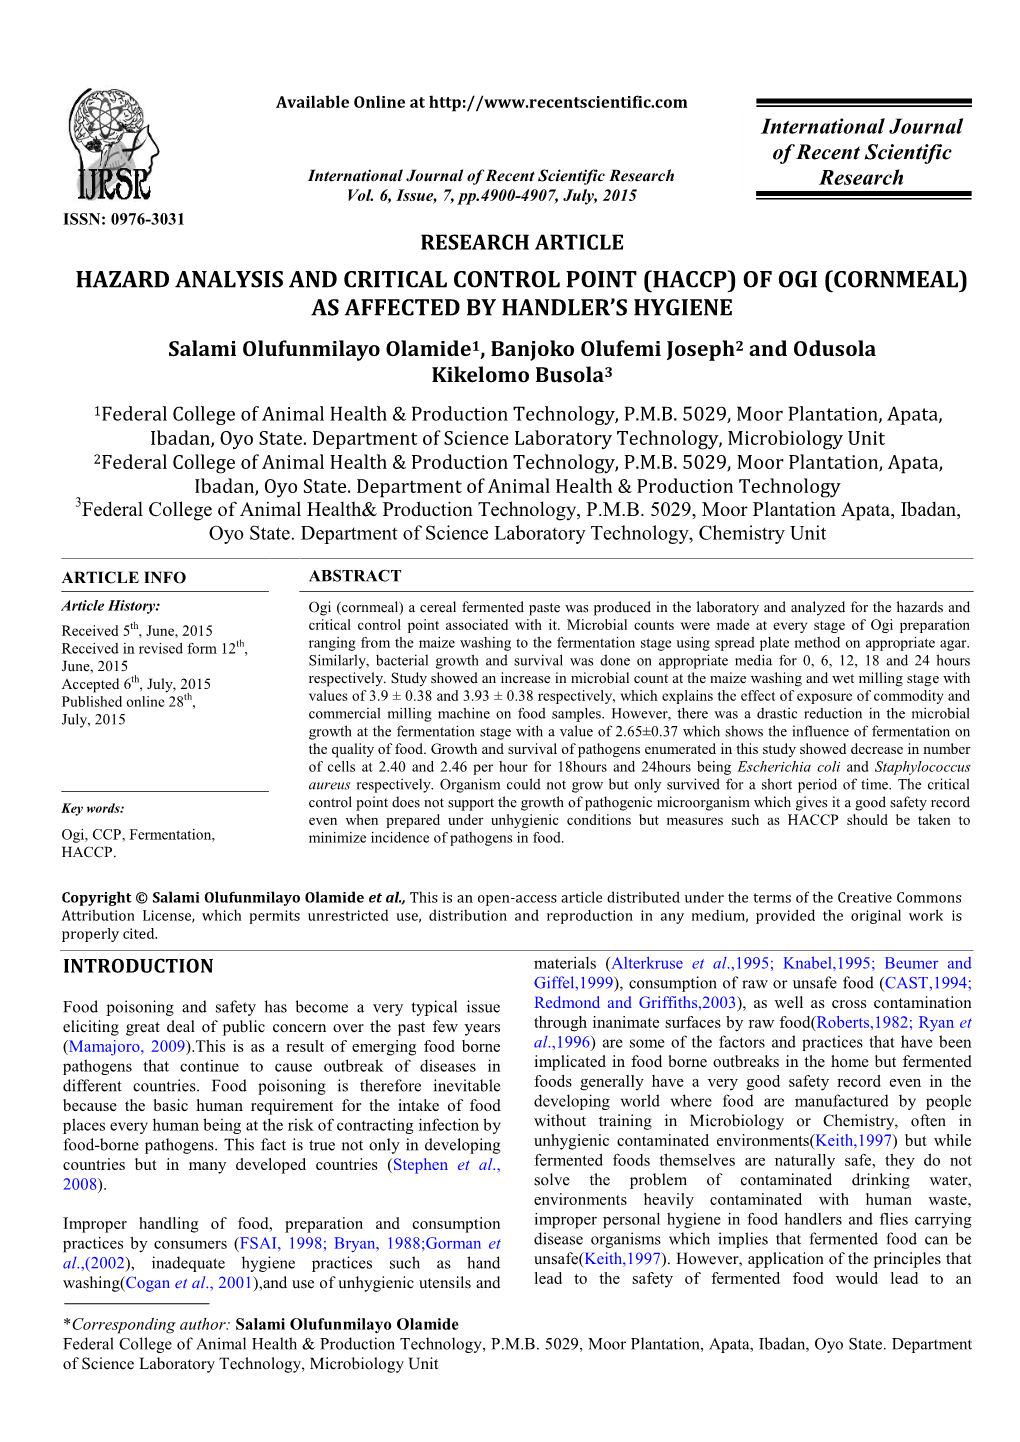 Hazard Analysis and Critical Control Point (Haccp) of Ogi